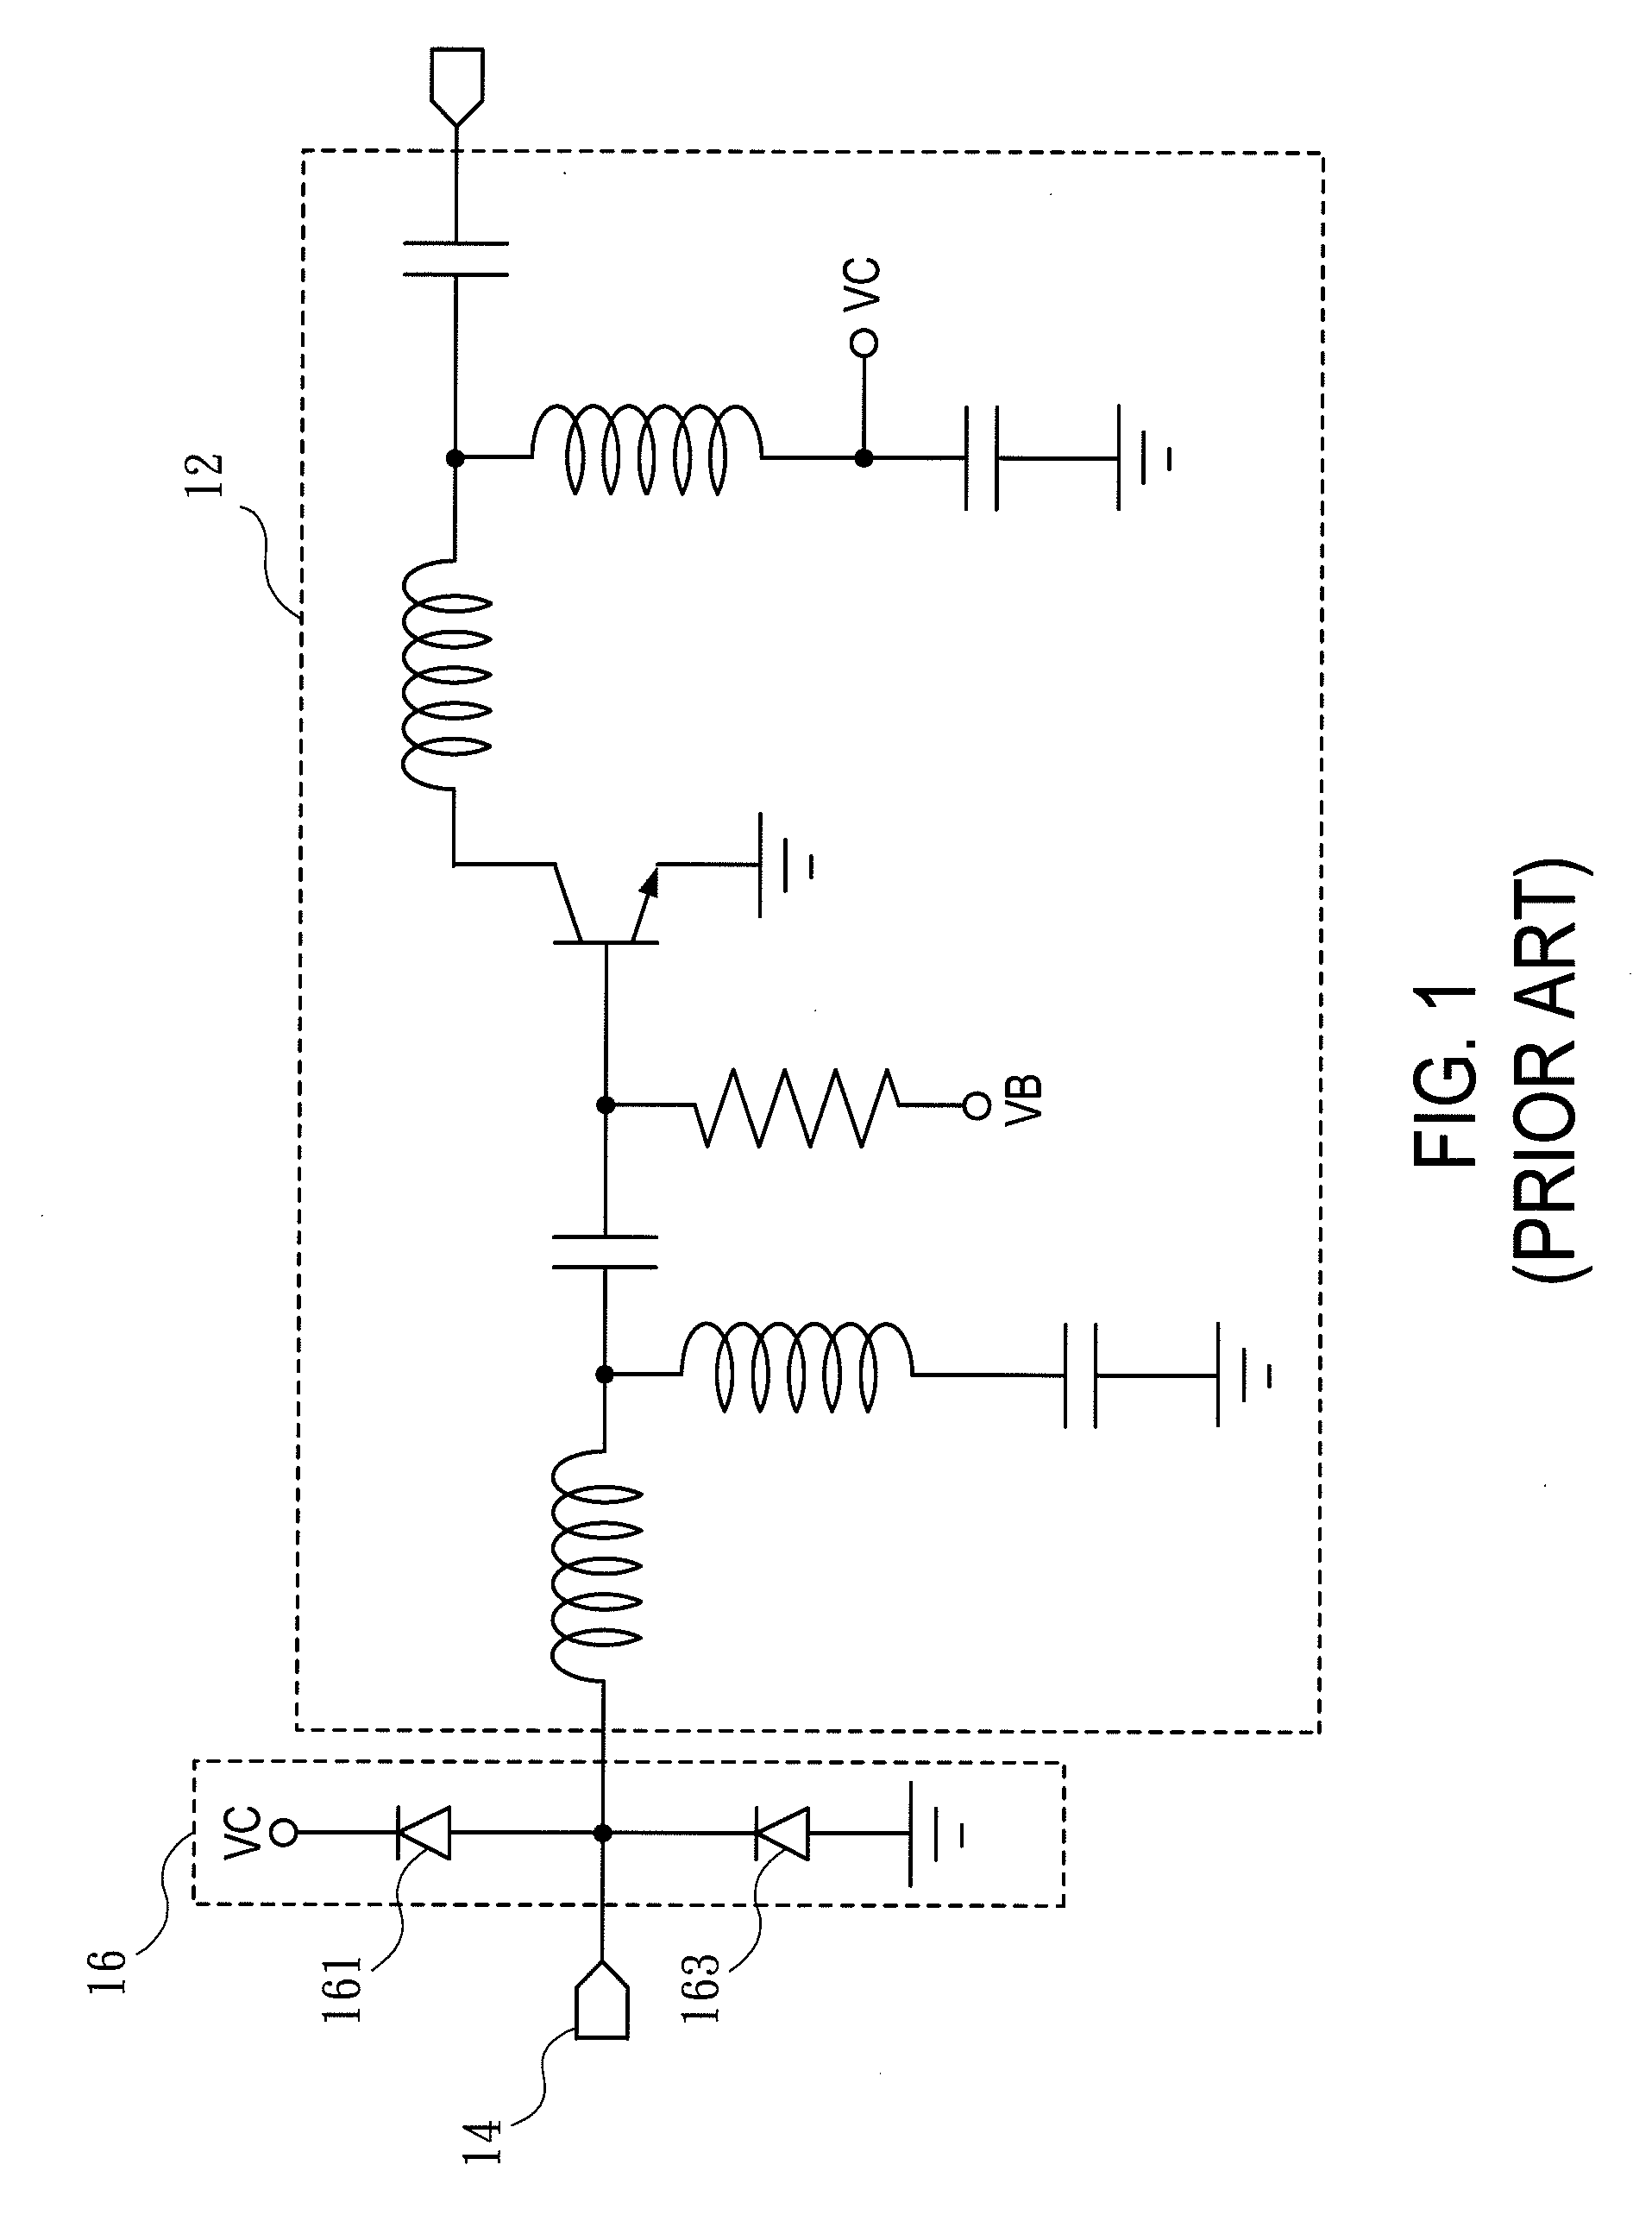 Low parasitic capacitance electrostatic discharge protection circuit